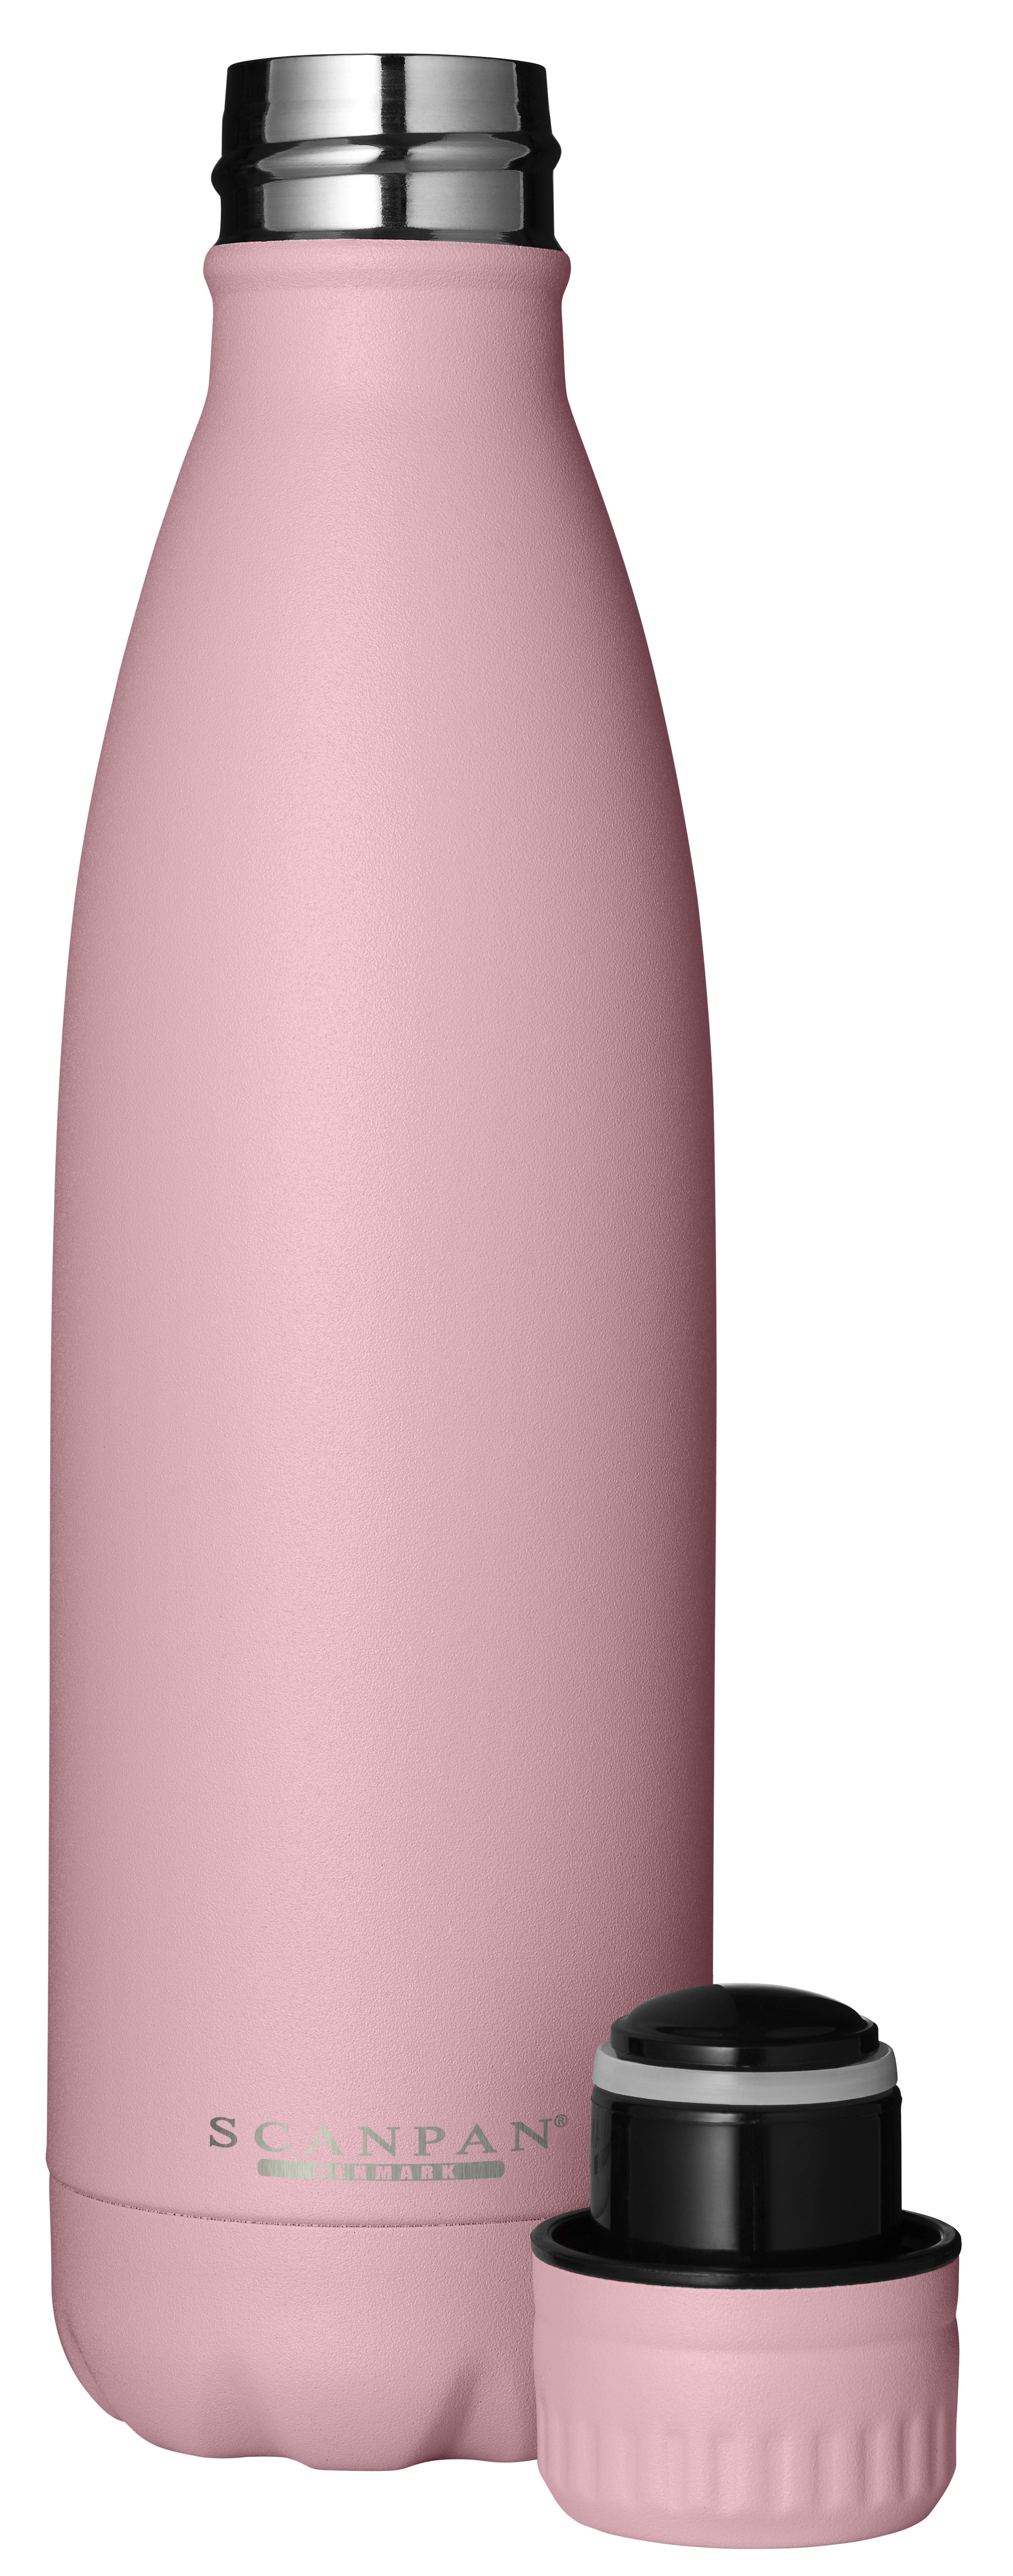 Scanpan TO GO Termoflaske, Candy Pink - 500 ml